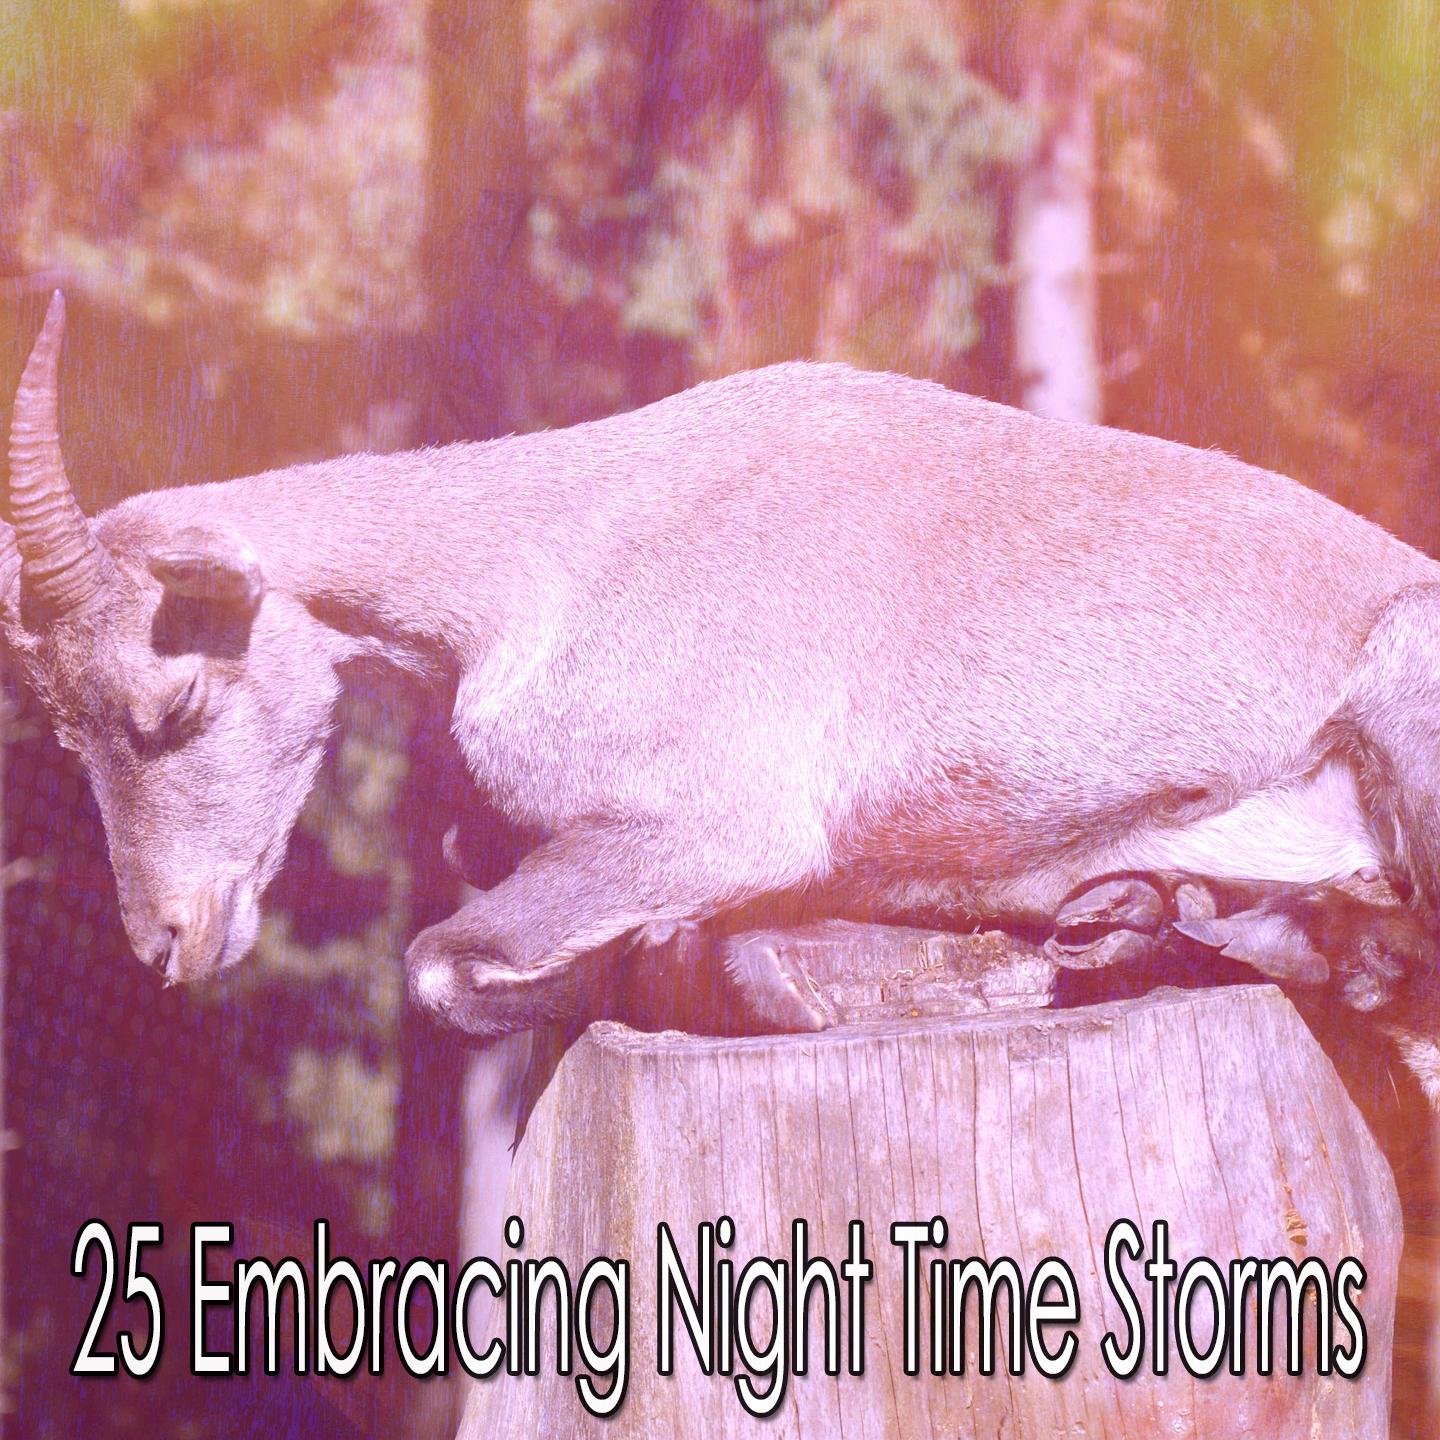 25 Embracing Night Time Storms